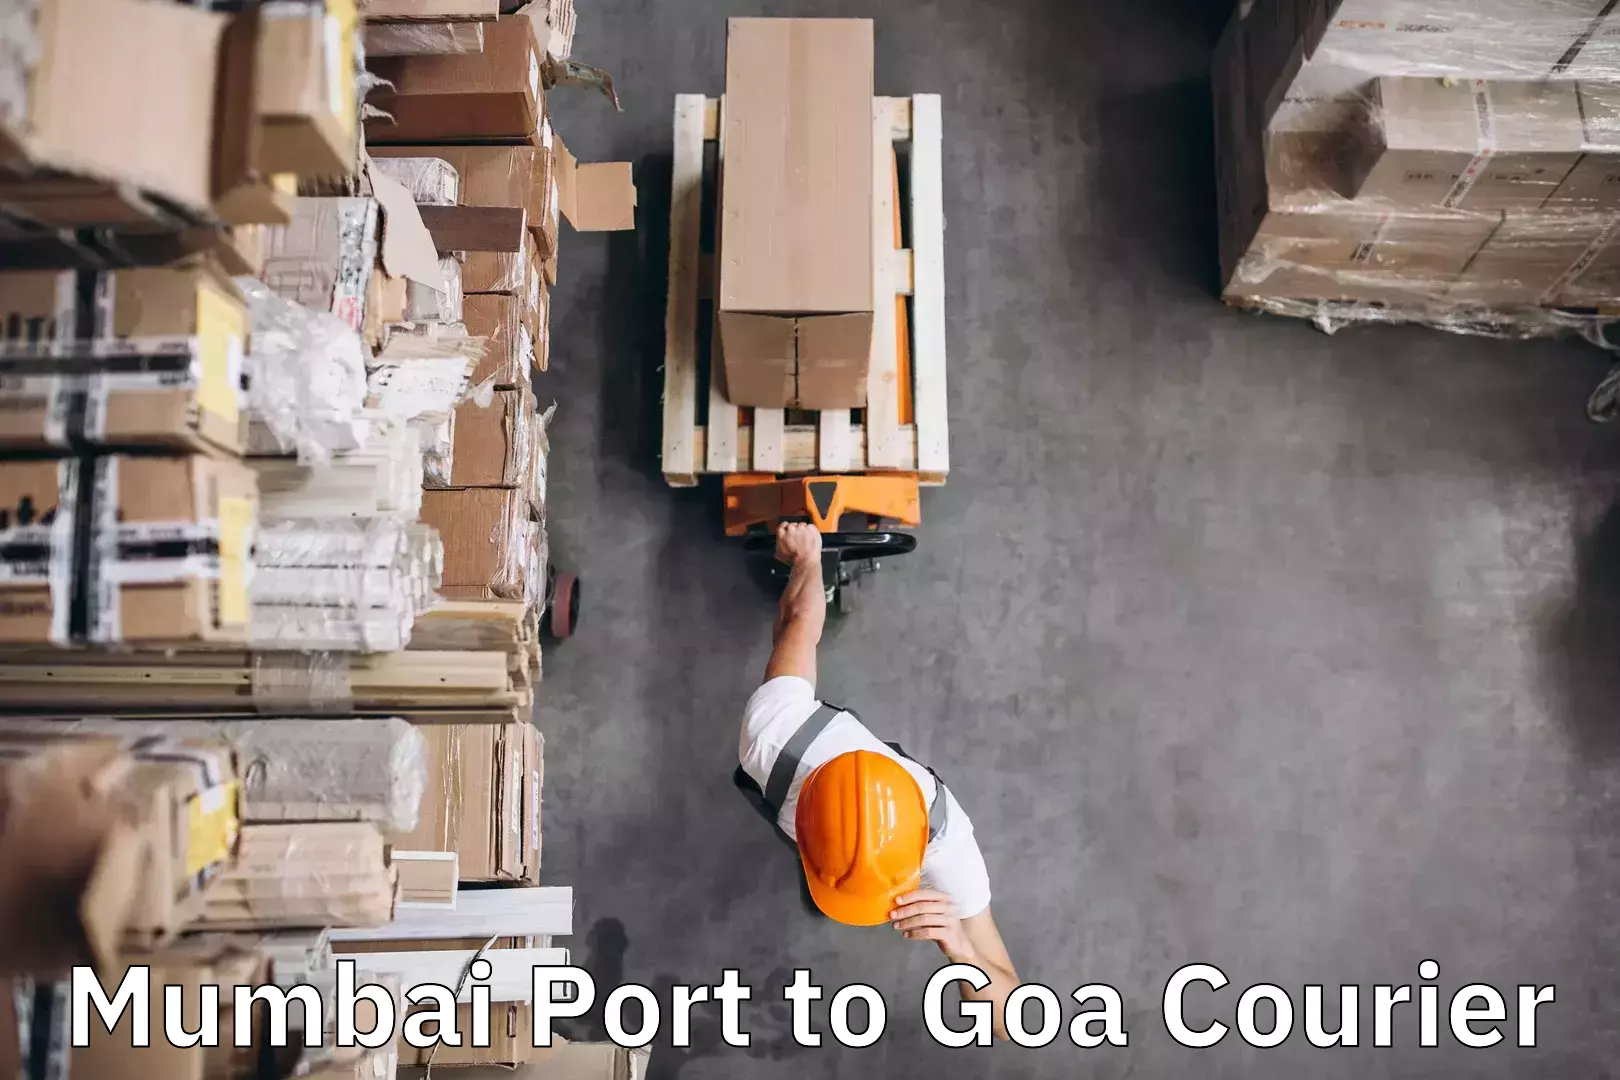 Hotel to Door baggage transport Mumbai Port to Goa